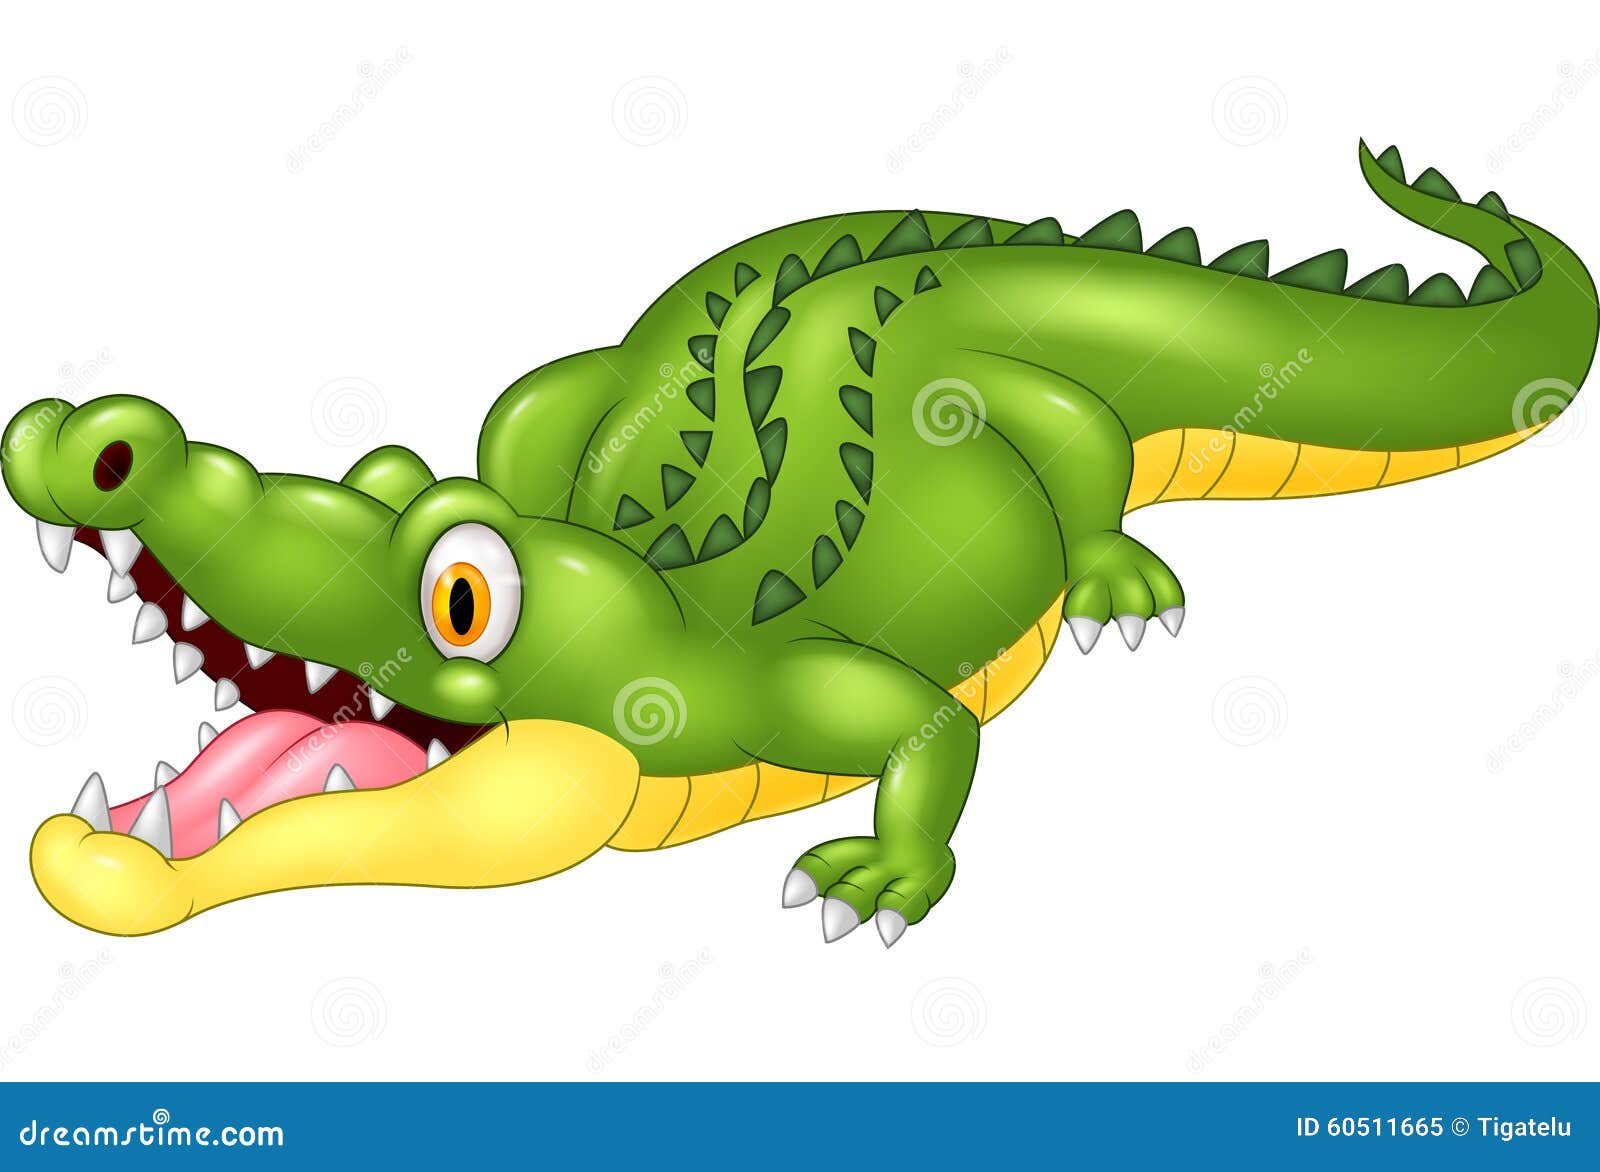 cartoon adorable crocodile